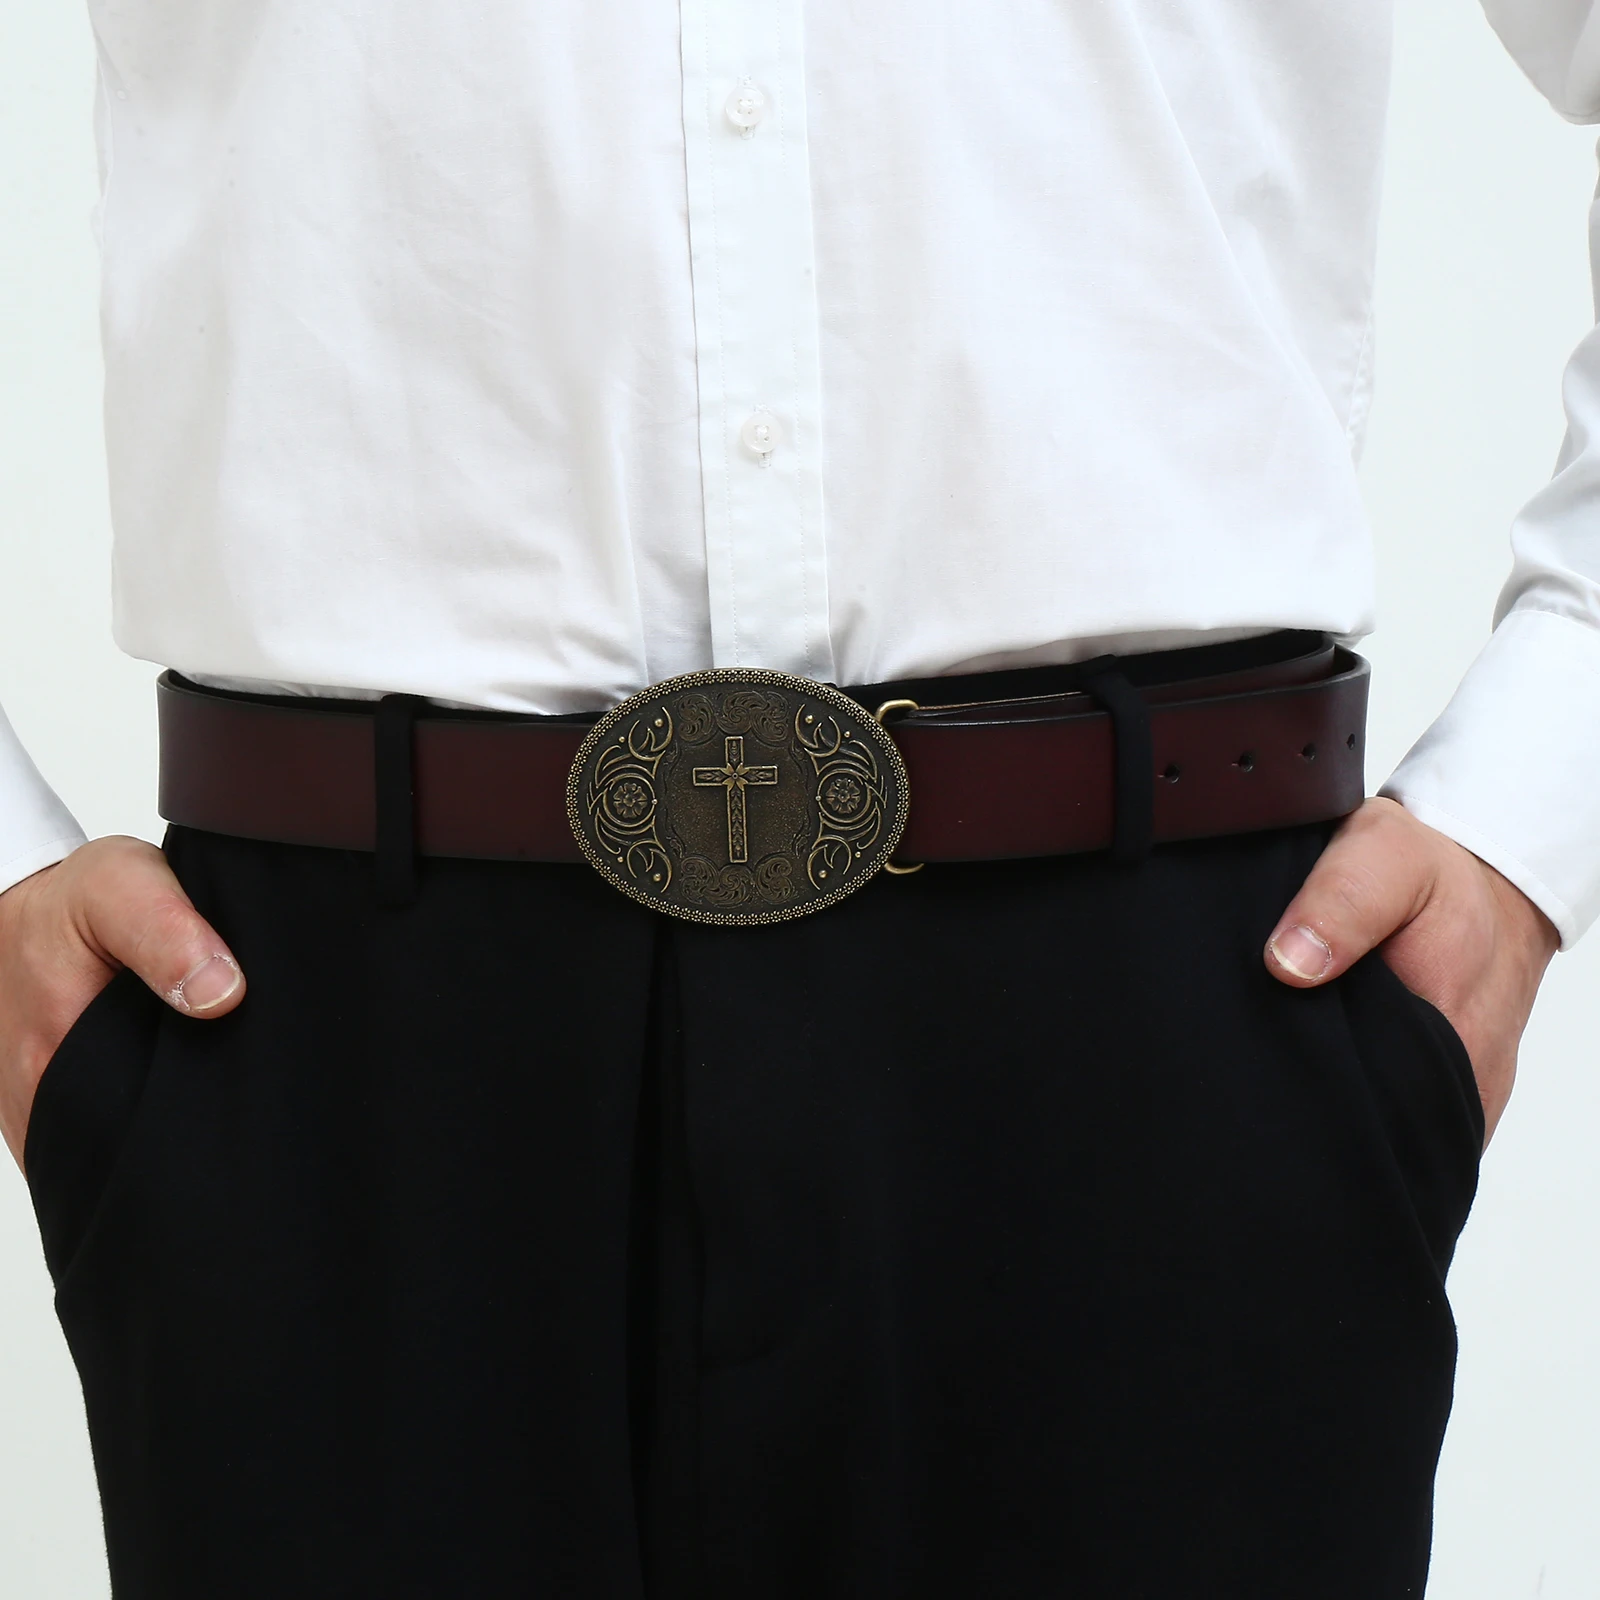 Western denim zinc alloy men's leather belt with jeans accessories simple and versatile